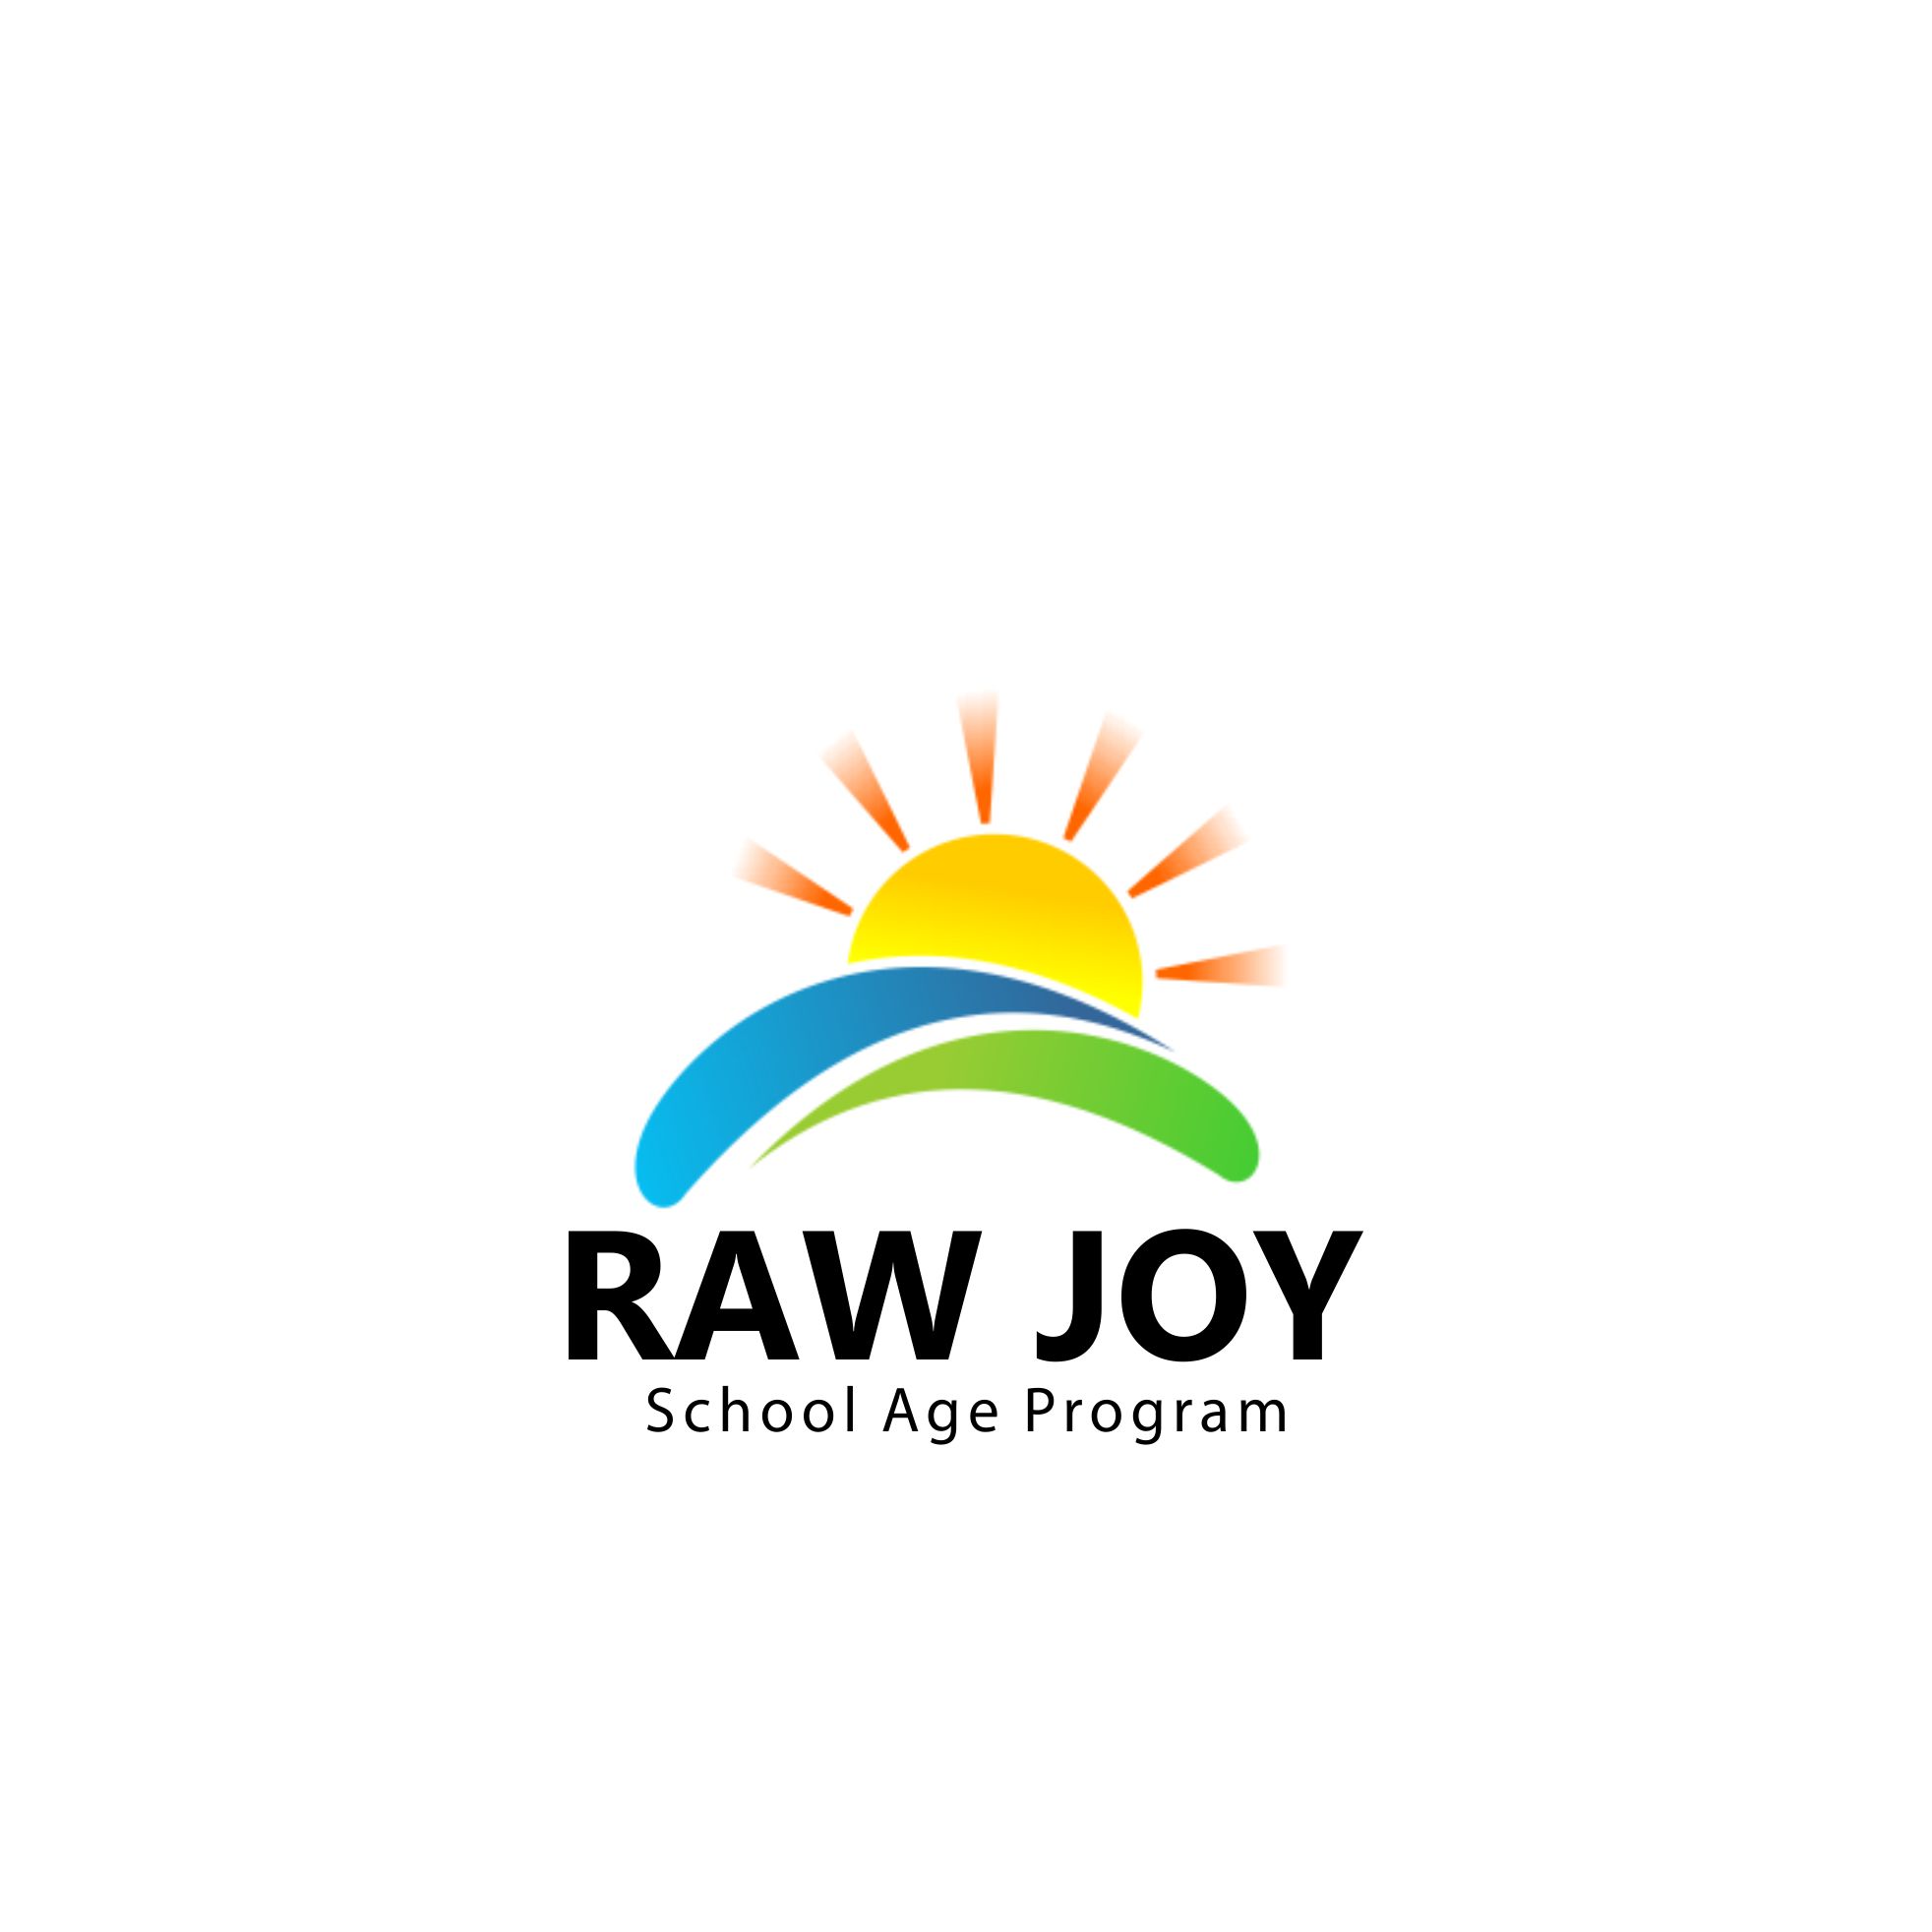 RAW JOY SCHOOL AGE PROGRAM